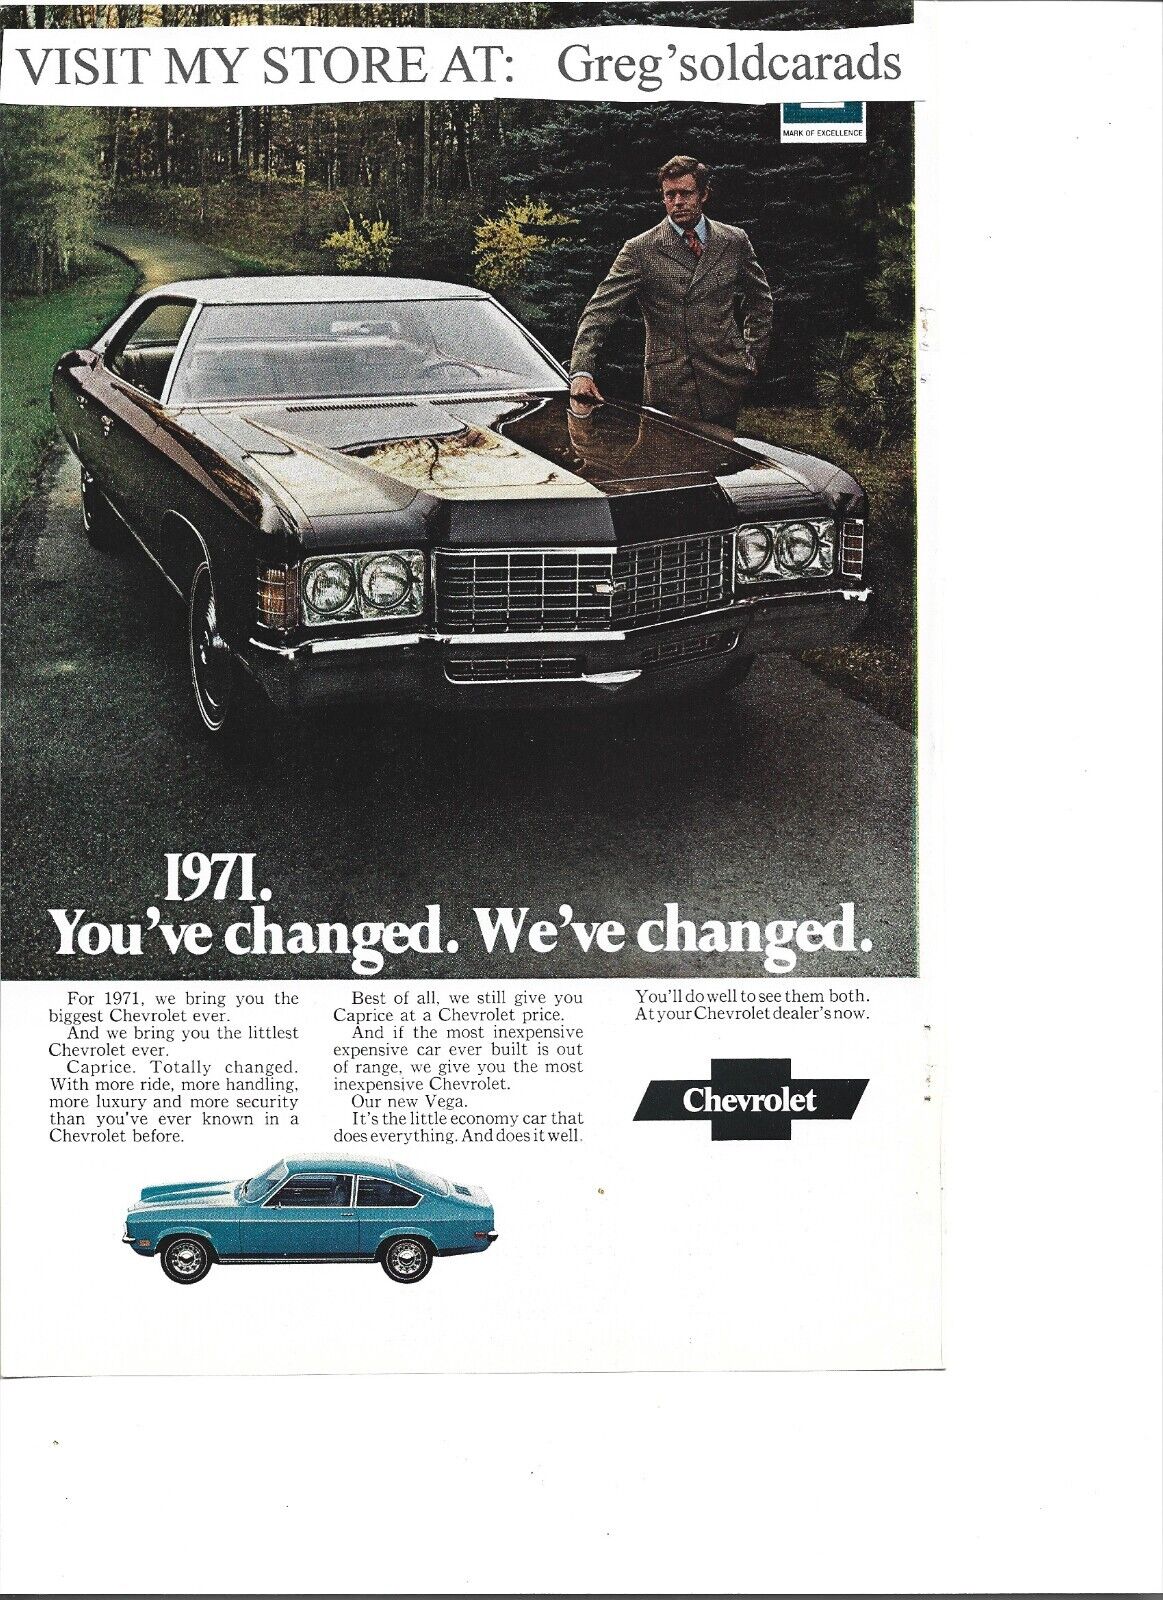 Two Original 1971 Chevrolet  Caprice print ad (ads), 1 also with a Vega